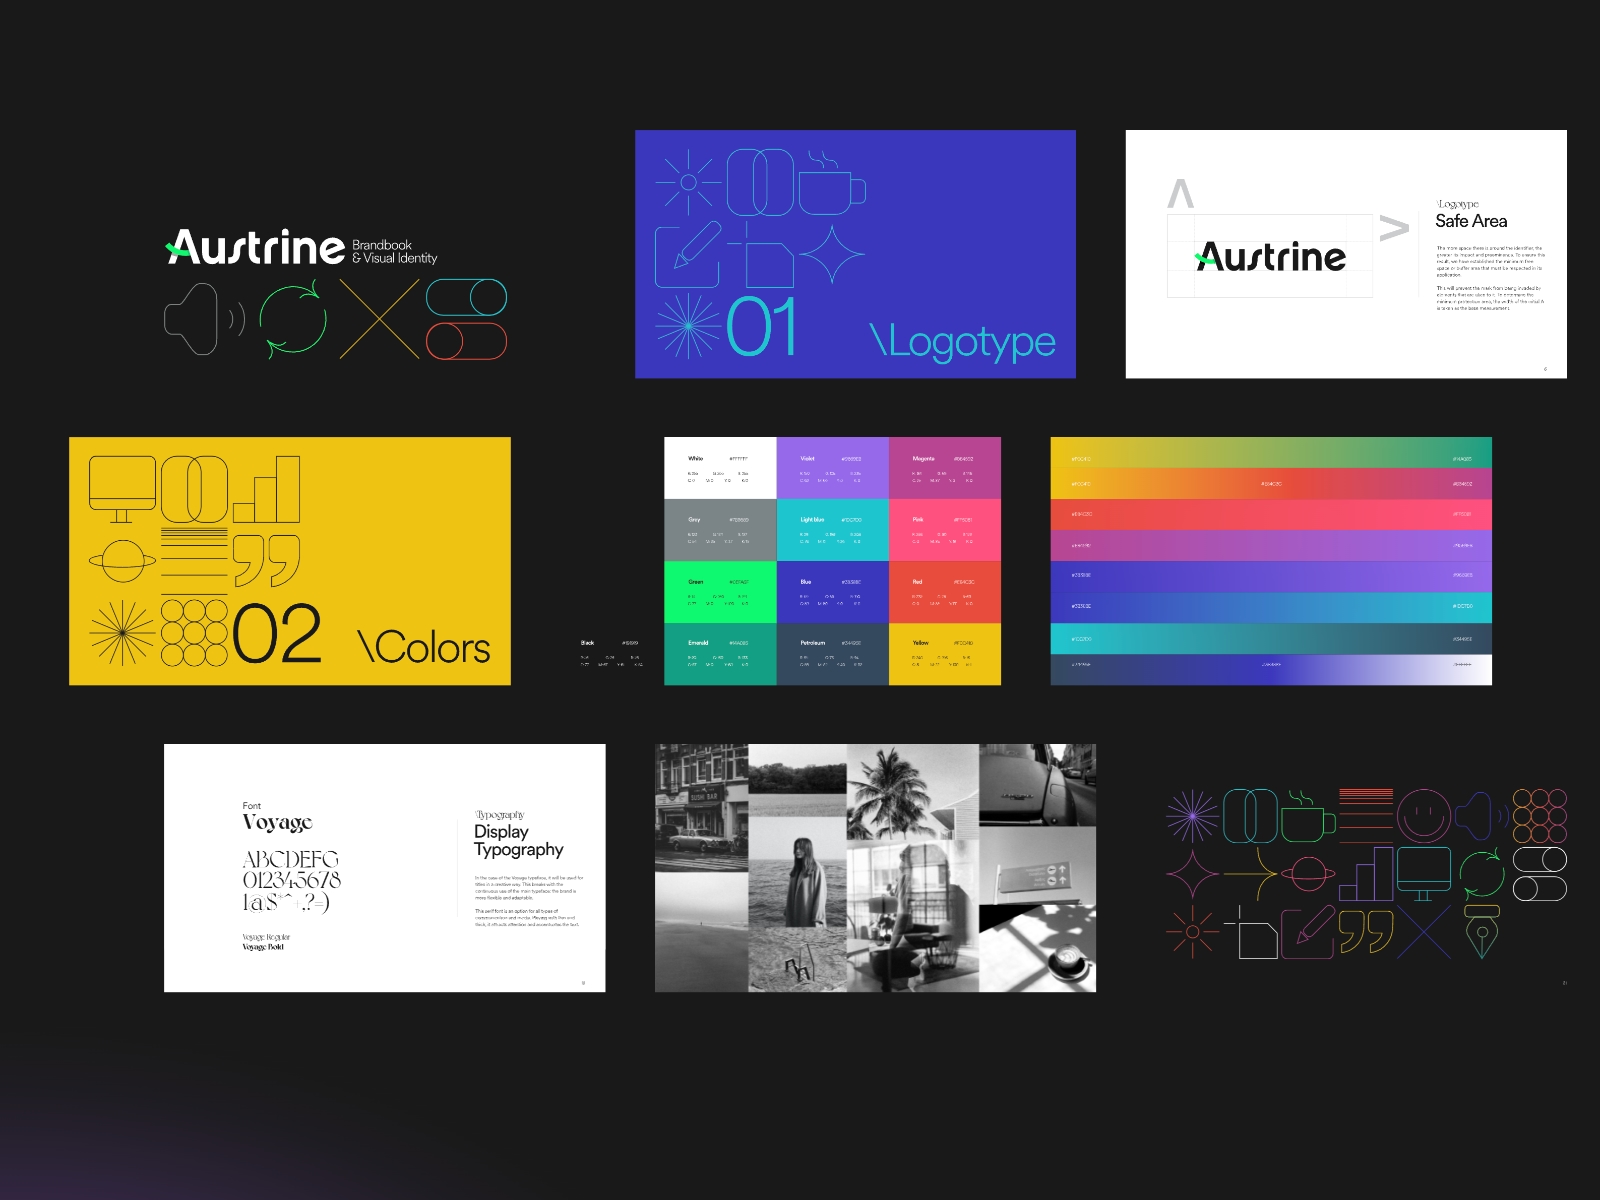 Austrine — Our Brand